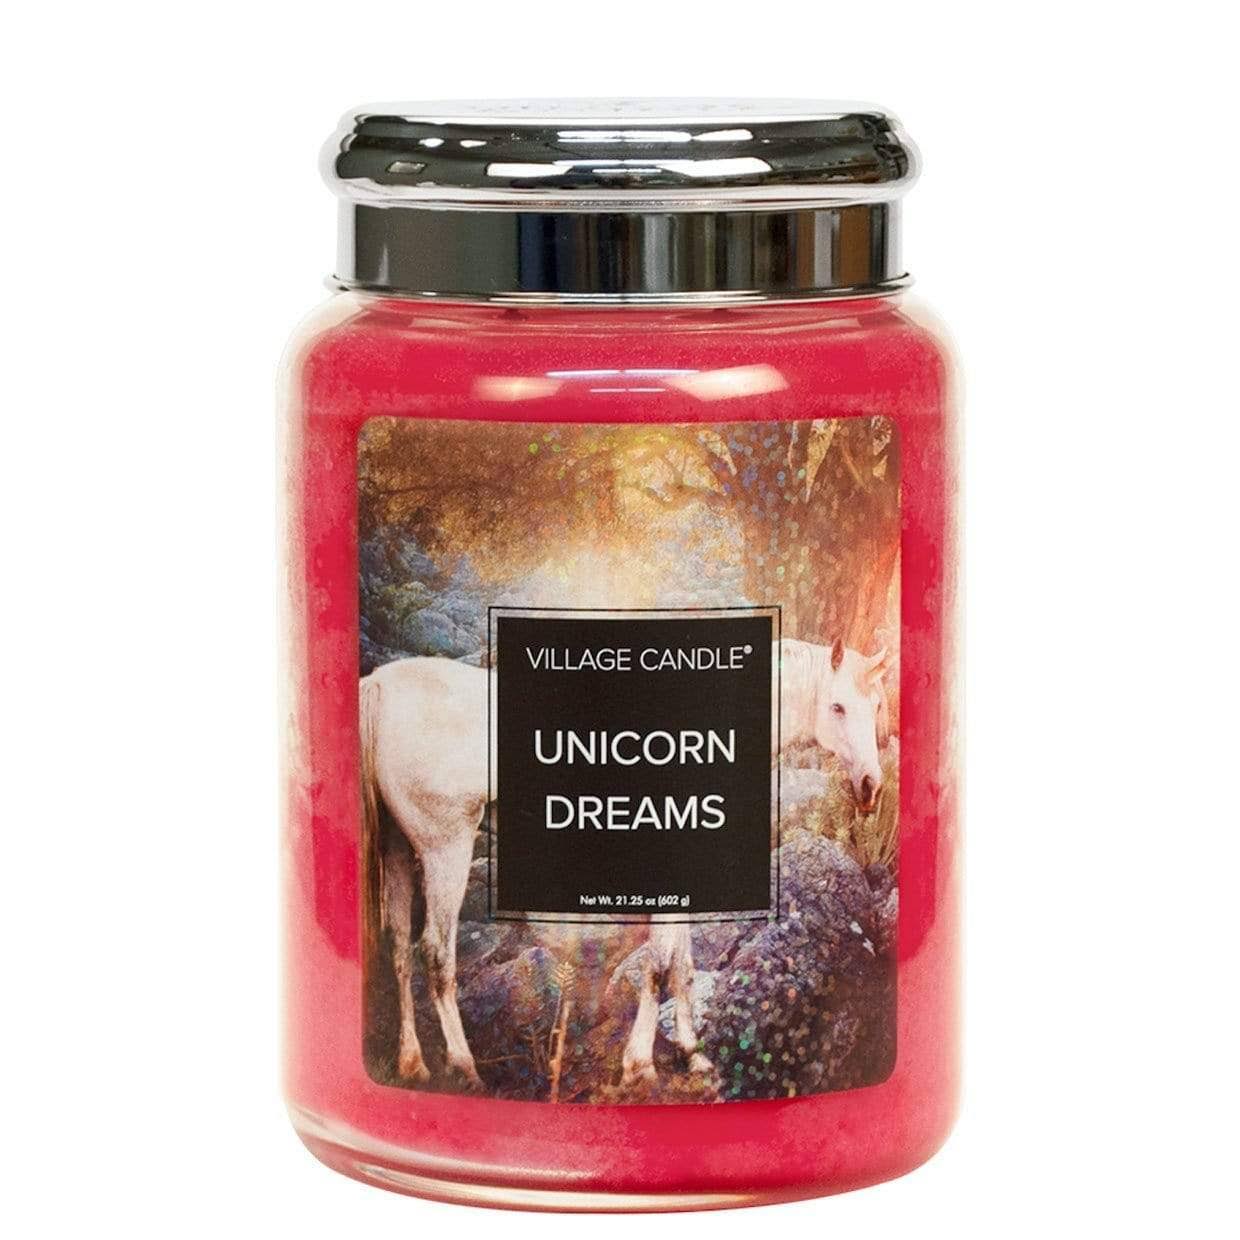 Village Candle Unicorn Dreams Large Jar Candle